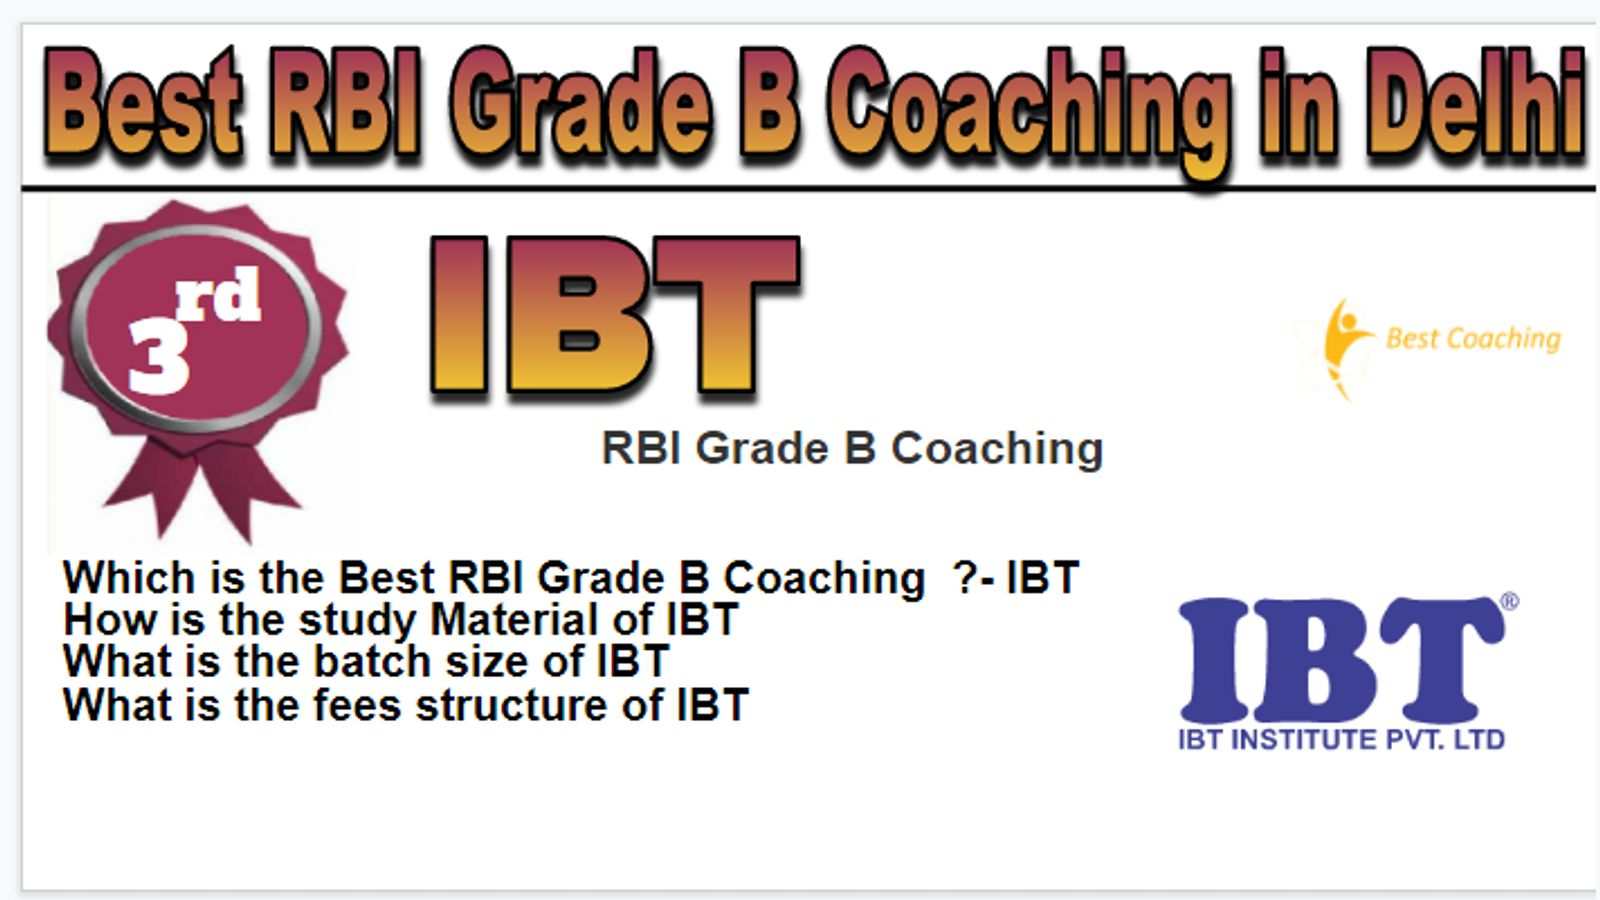 Rank 3 Best RBI Grade B Coaching in Delhi